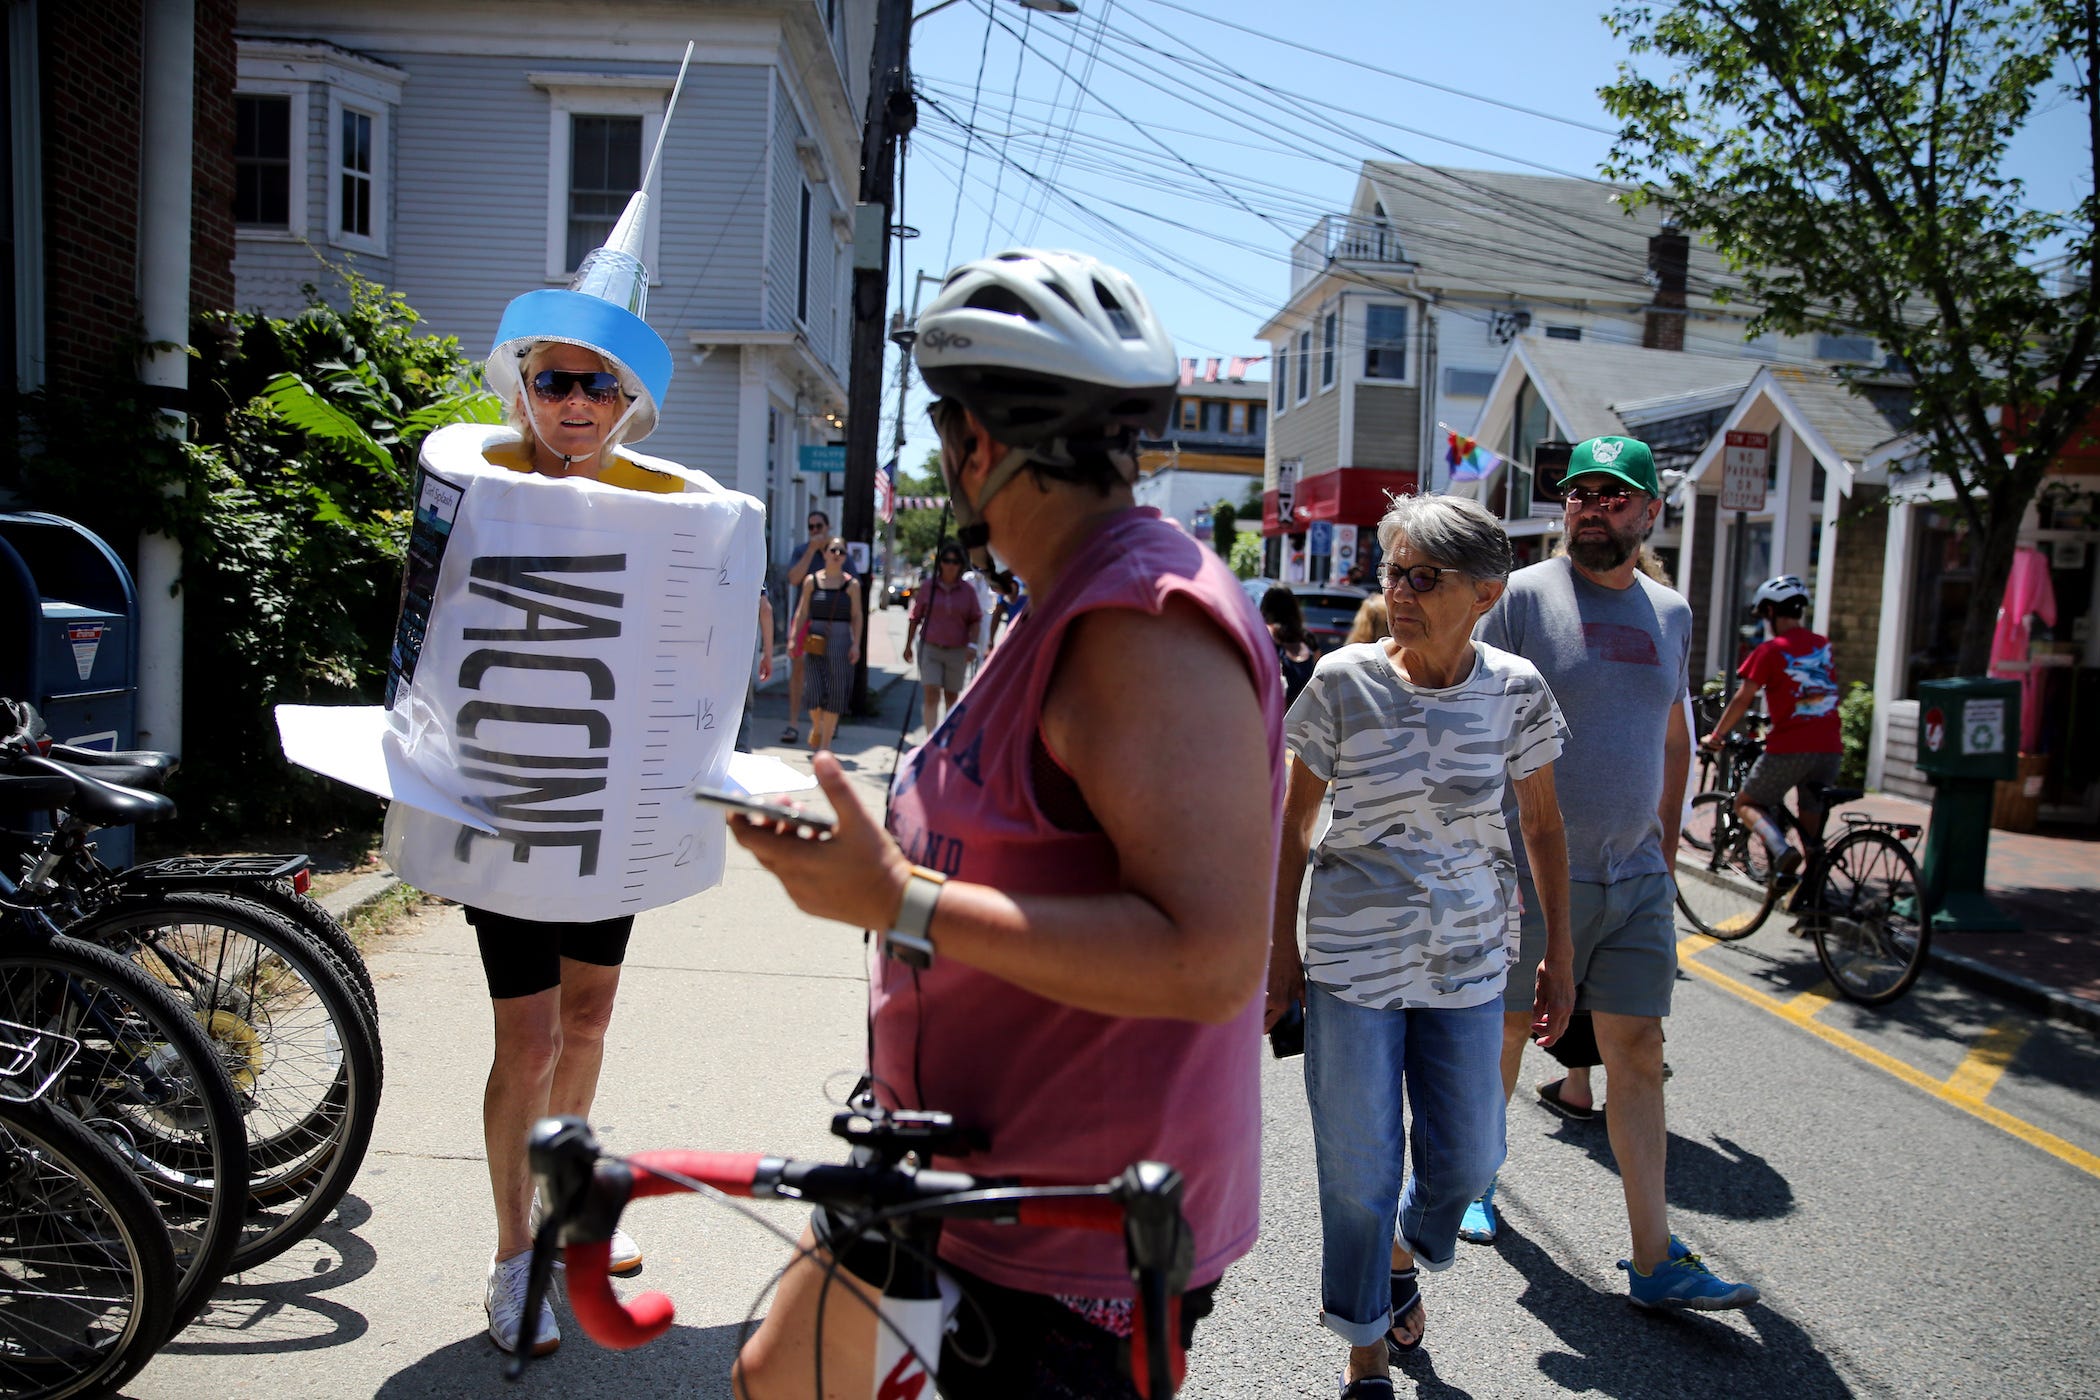 woman wearing vaccine costume walks down street with bikers, pedestrians watching